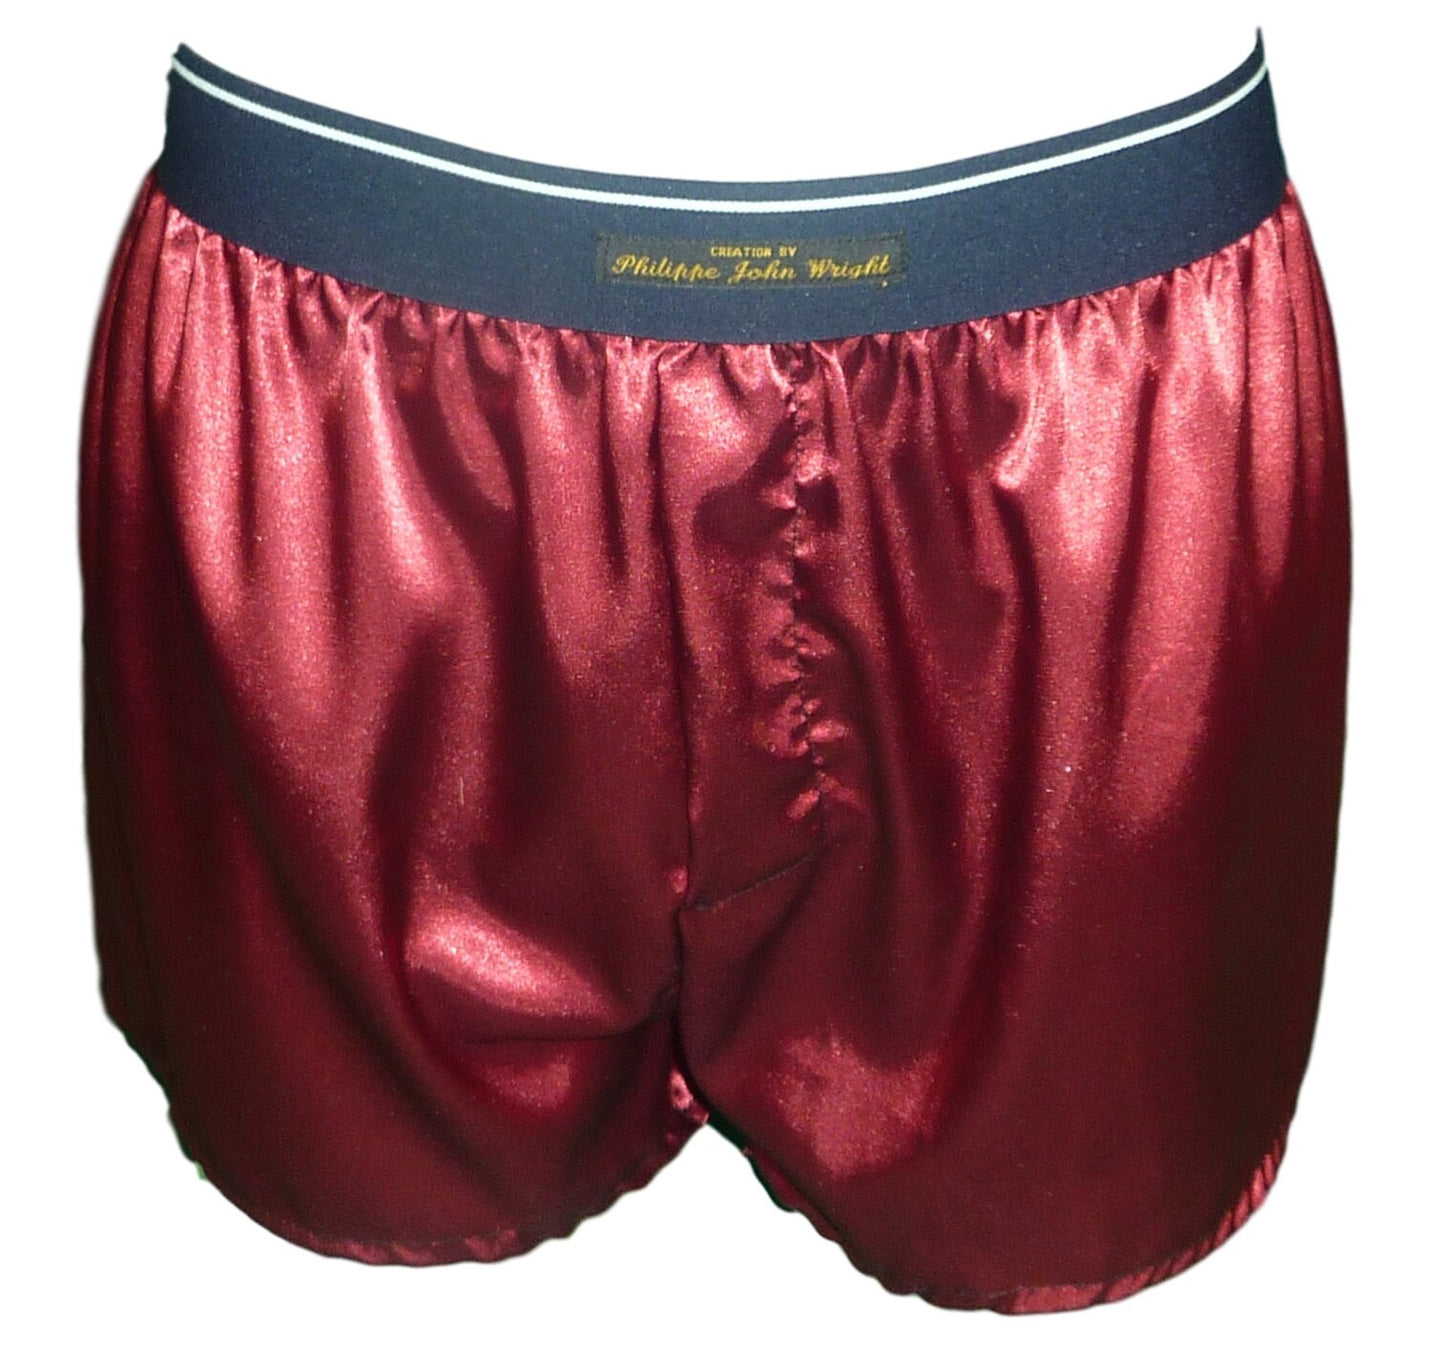 Burgundy bordeau satin boxer shorts for men made in France